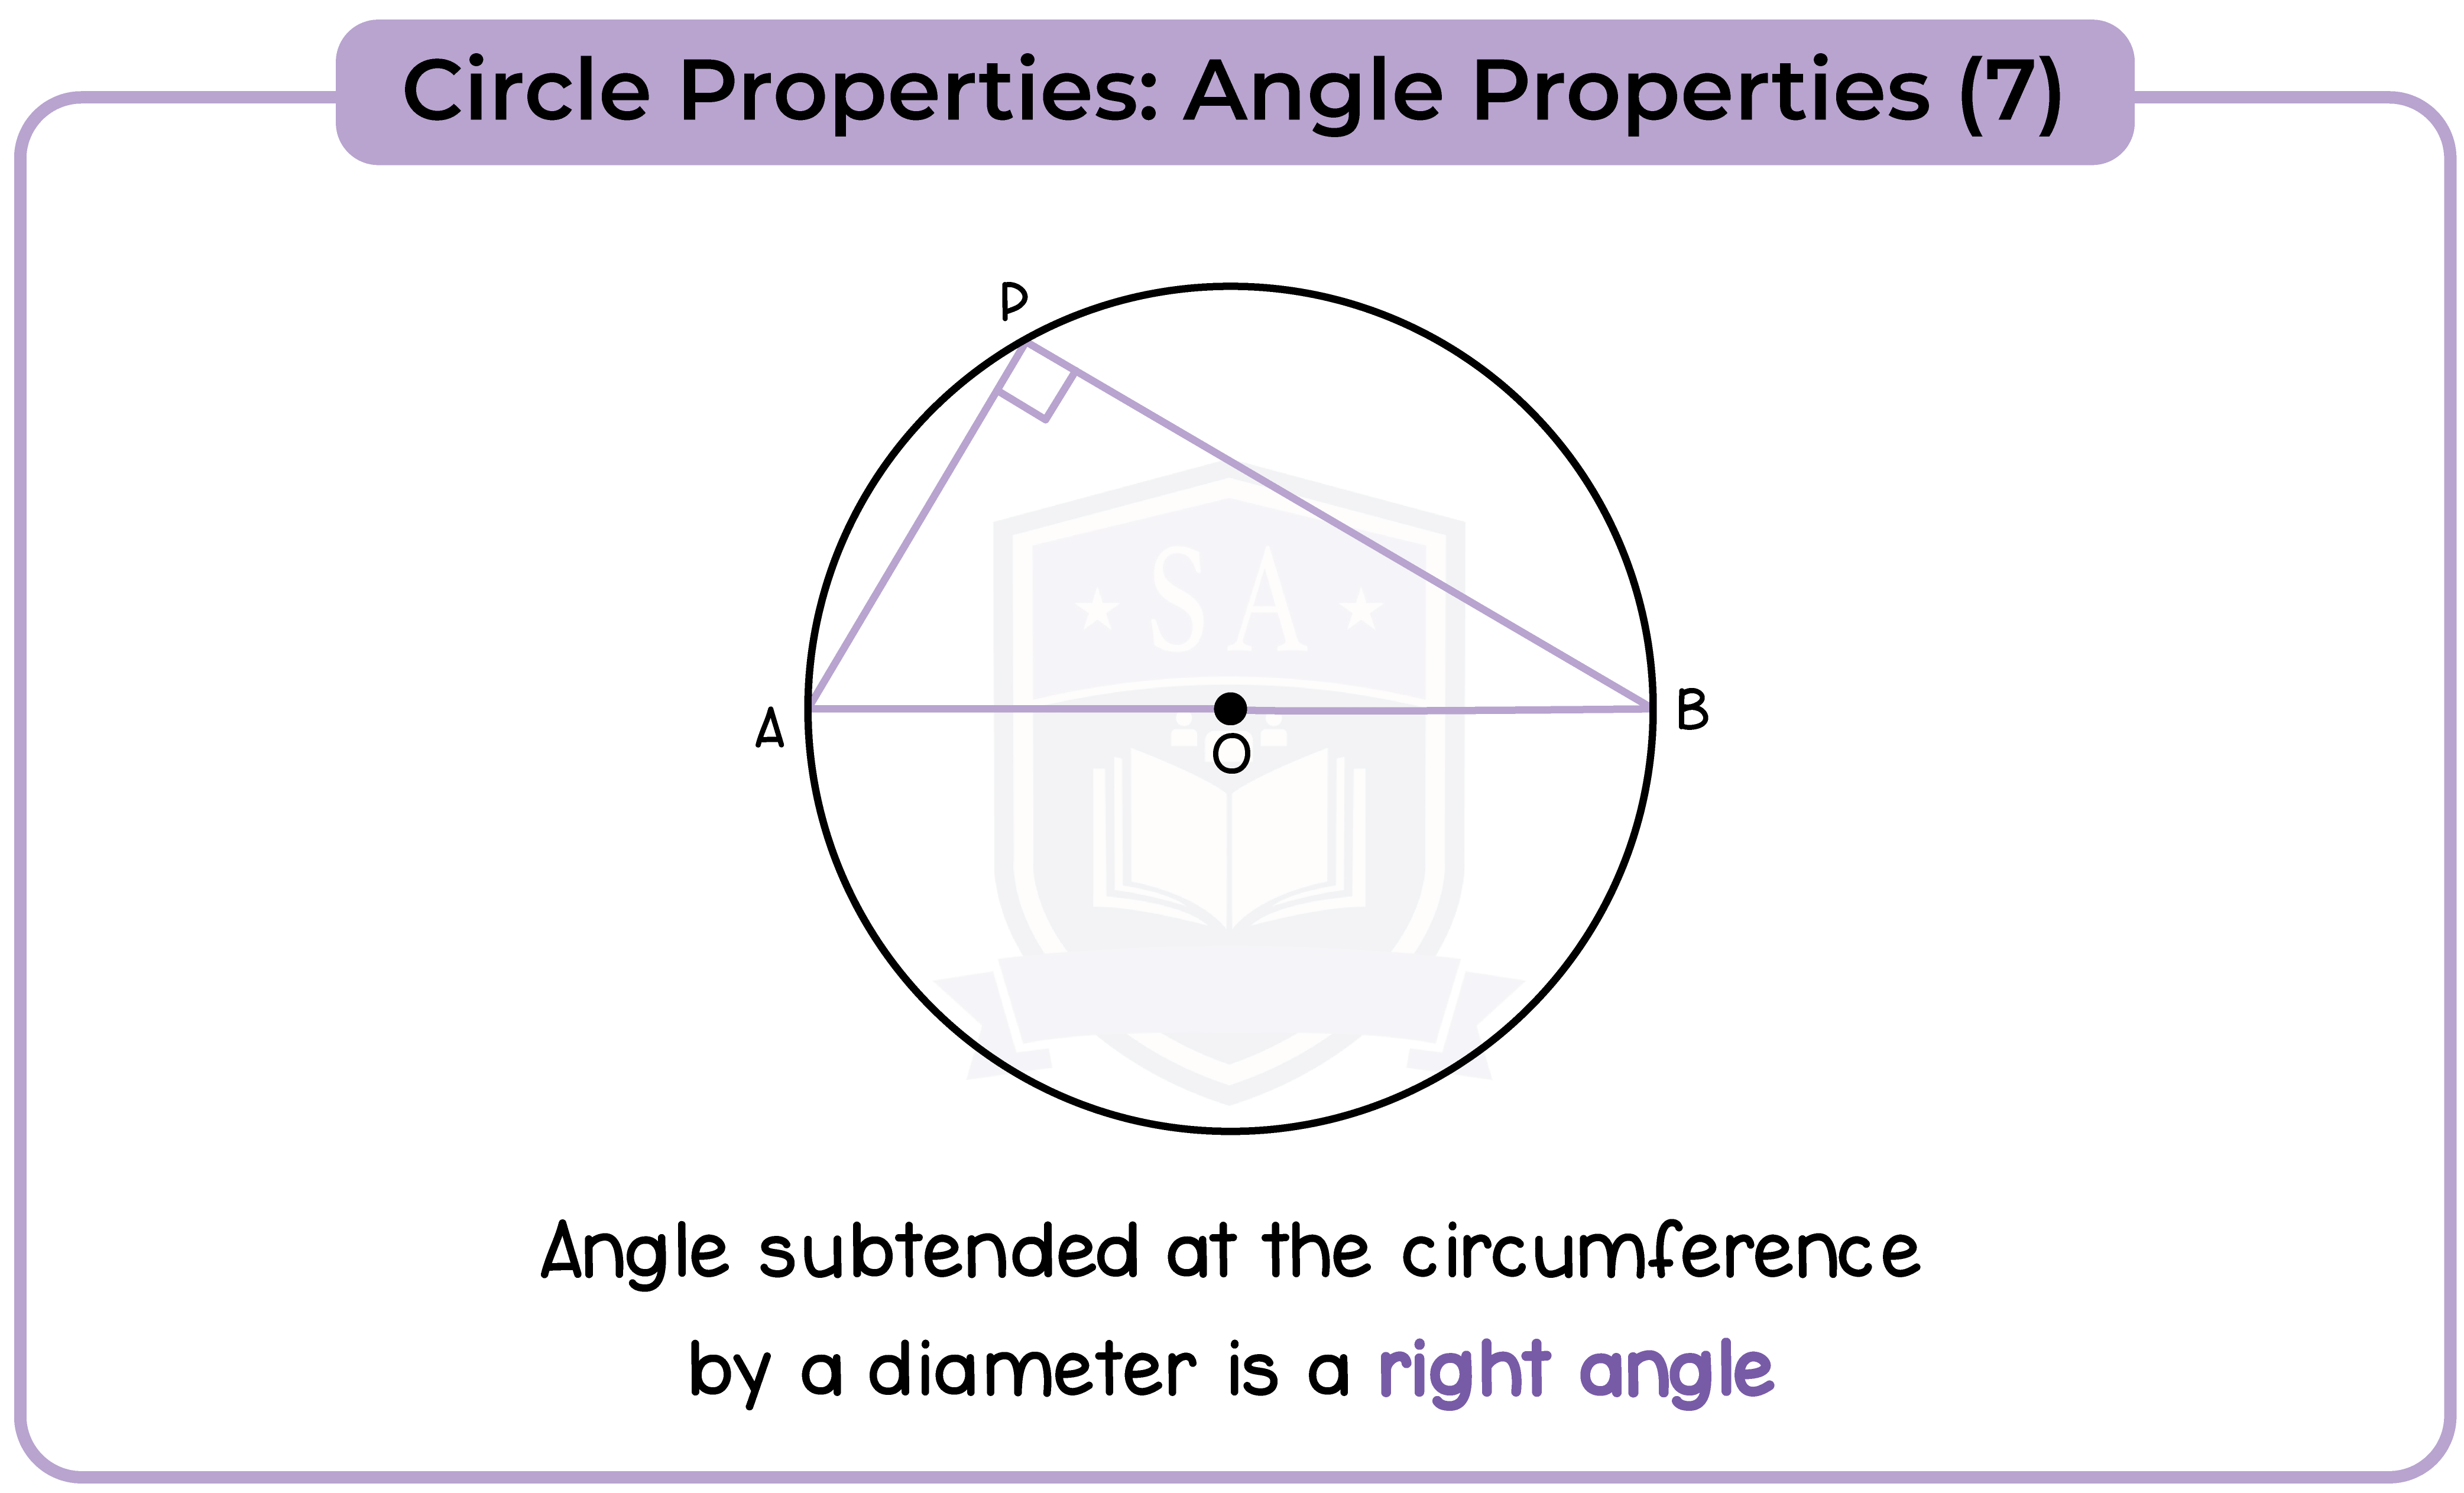 edexcel_igcse_mathematics a_topic 30_circle properties_011_Circle Properties: Angle Properties (7)